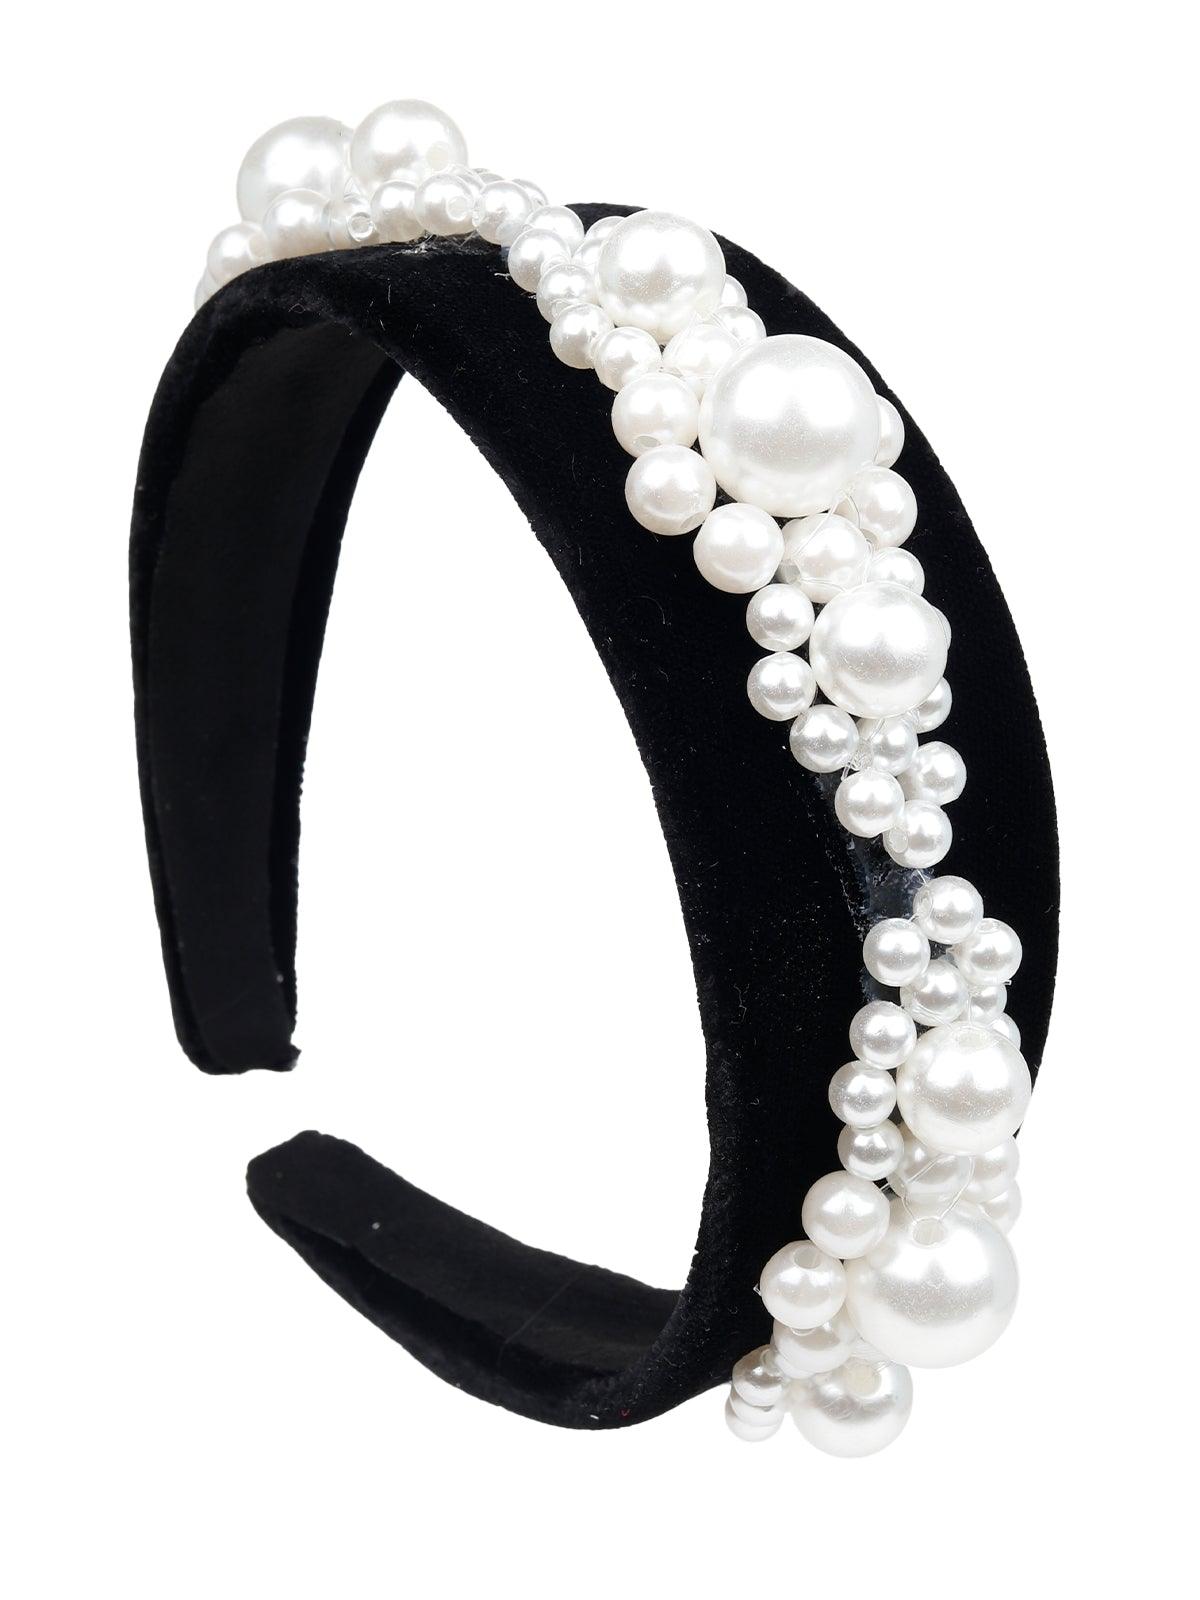 Exquisite Pearl Hairband On A Black Velvet Base - Odette